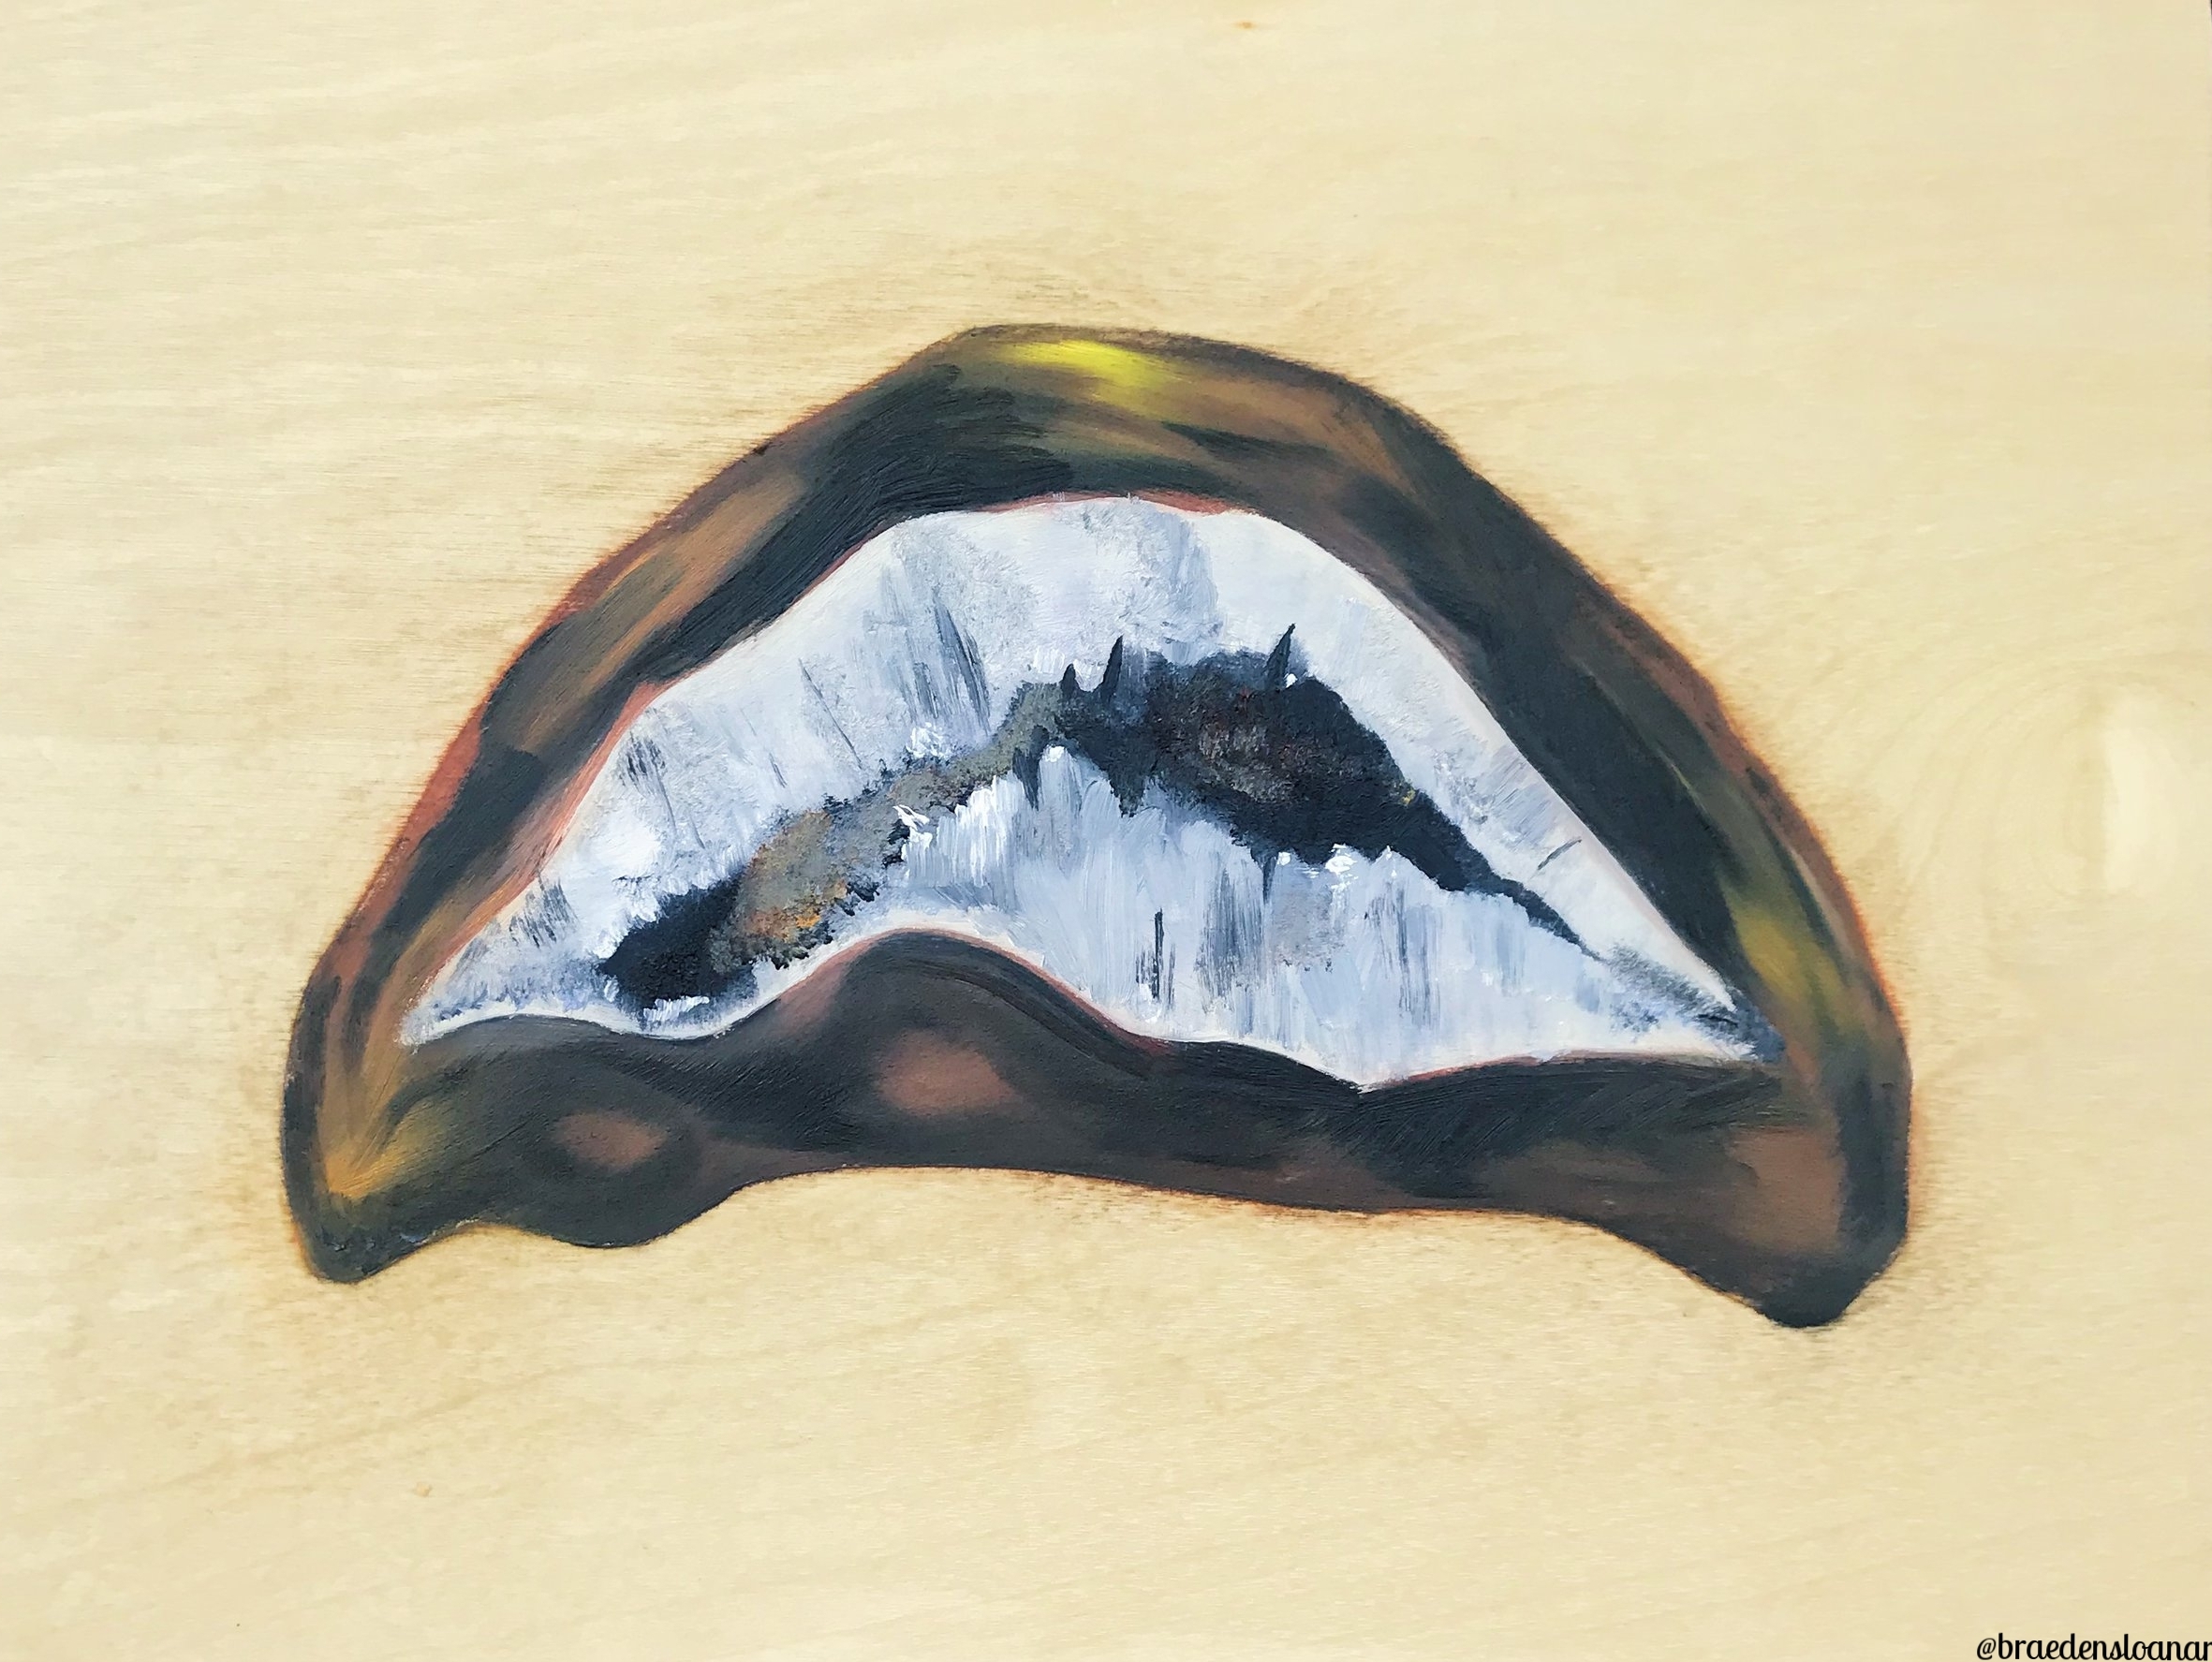  Geode Crystal   Oil paint on unprimed wood panel  